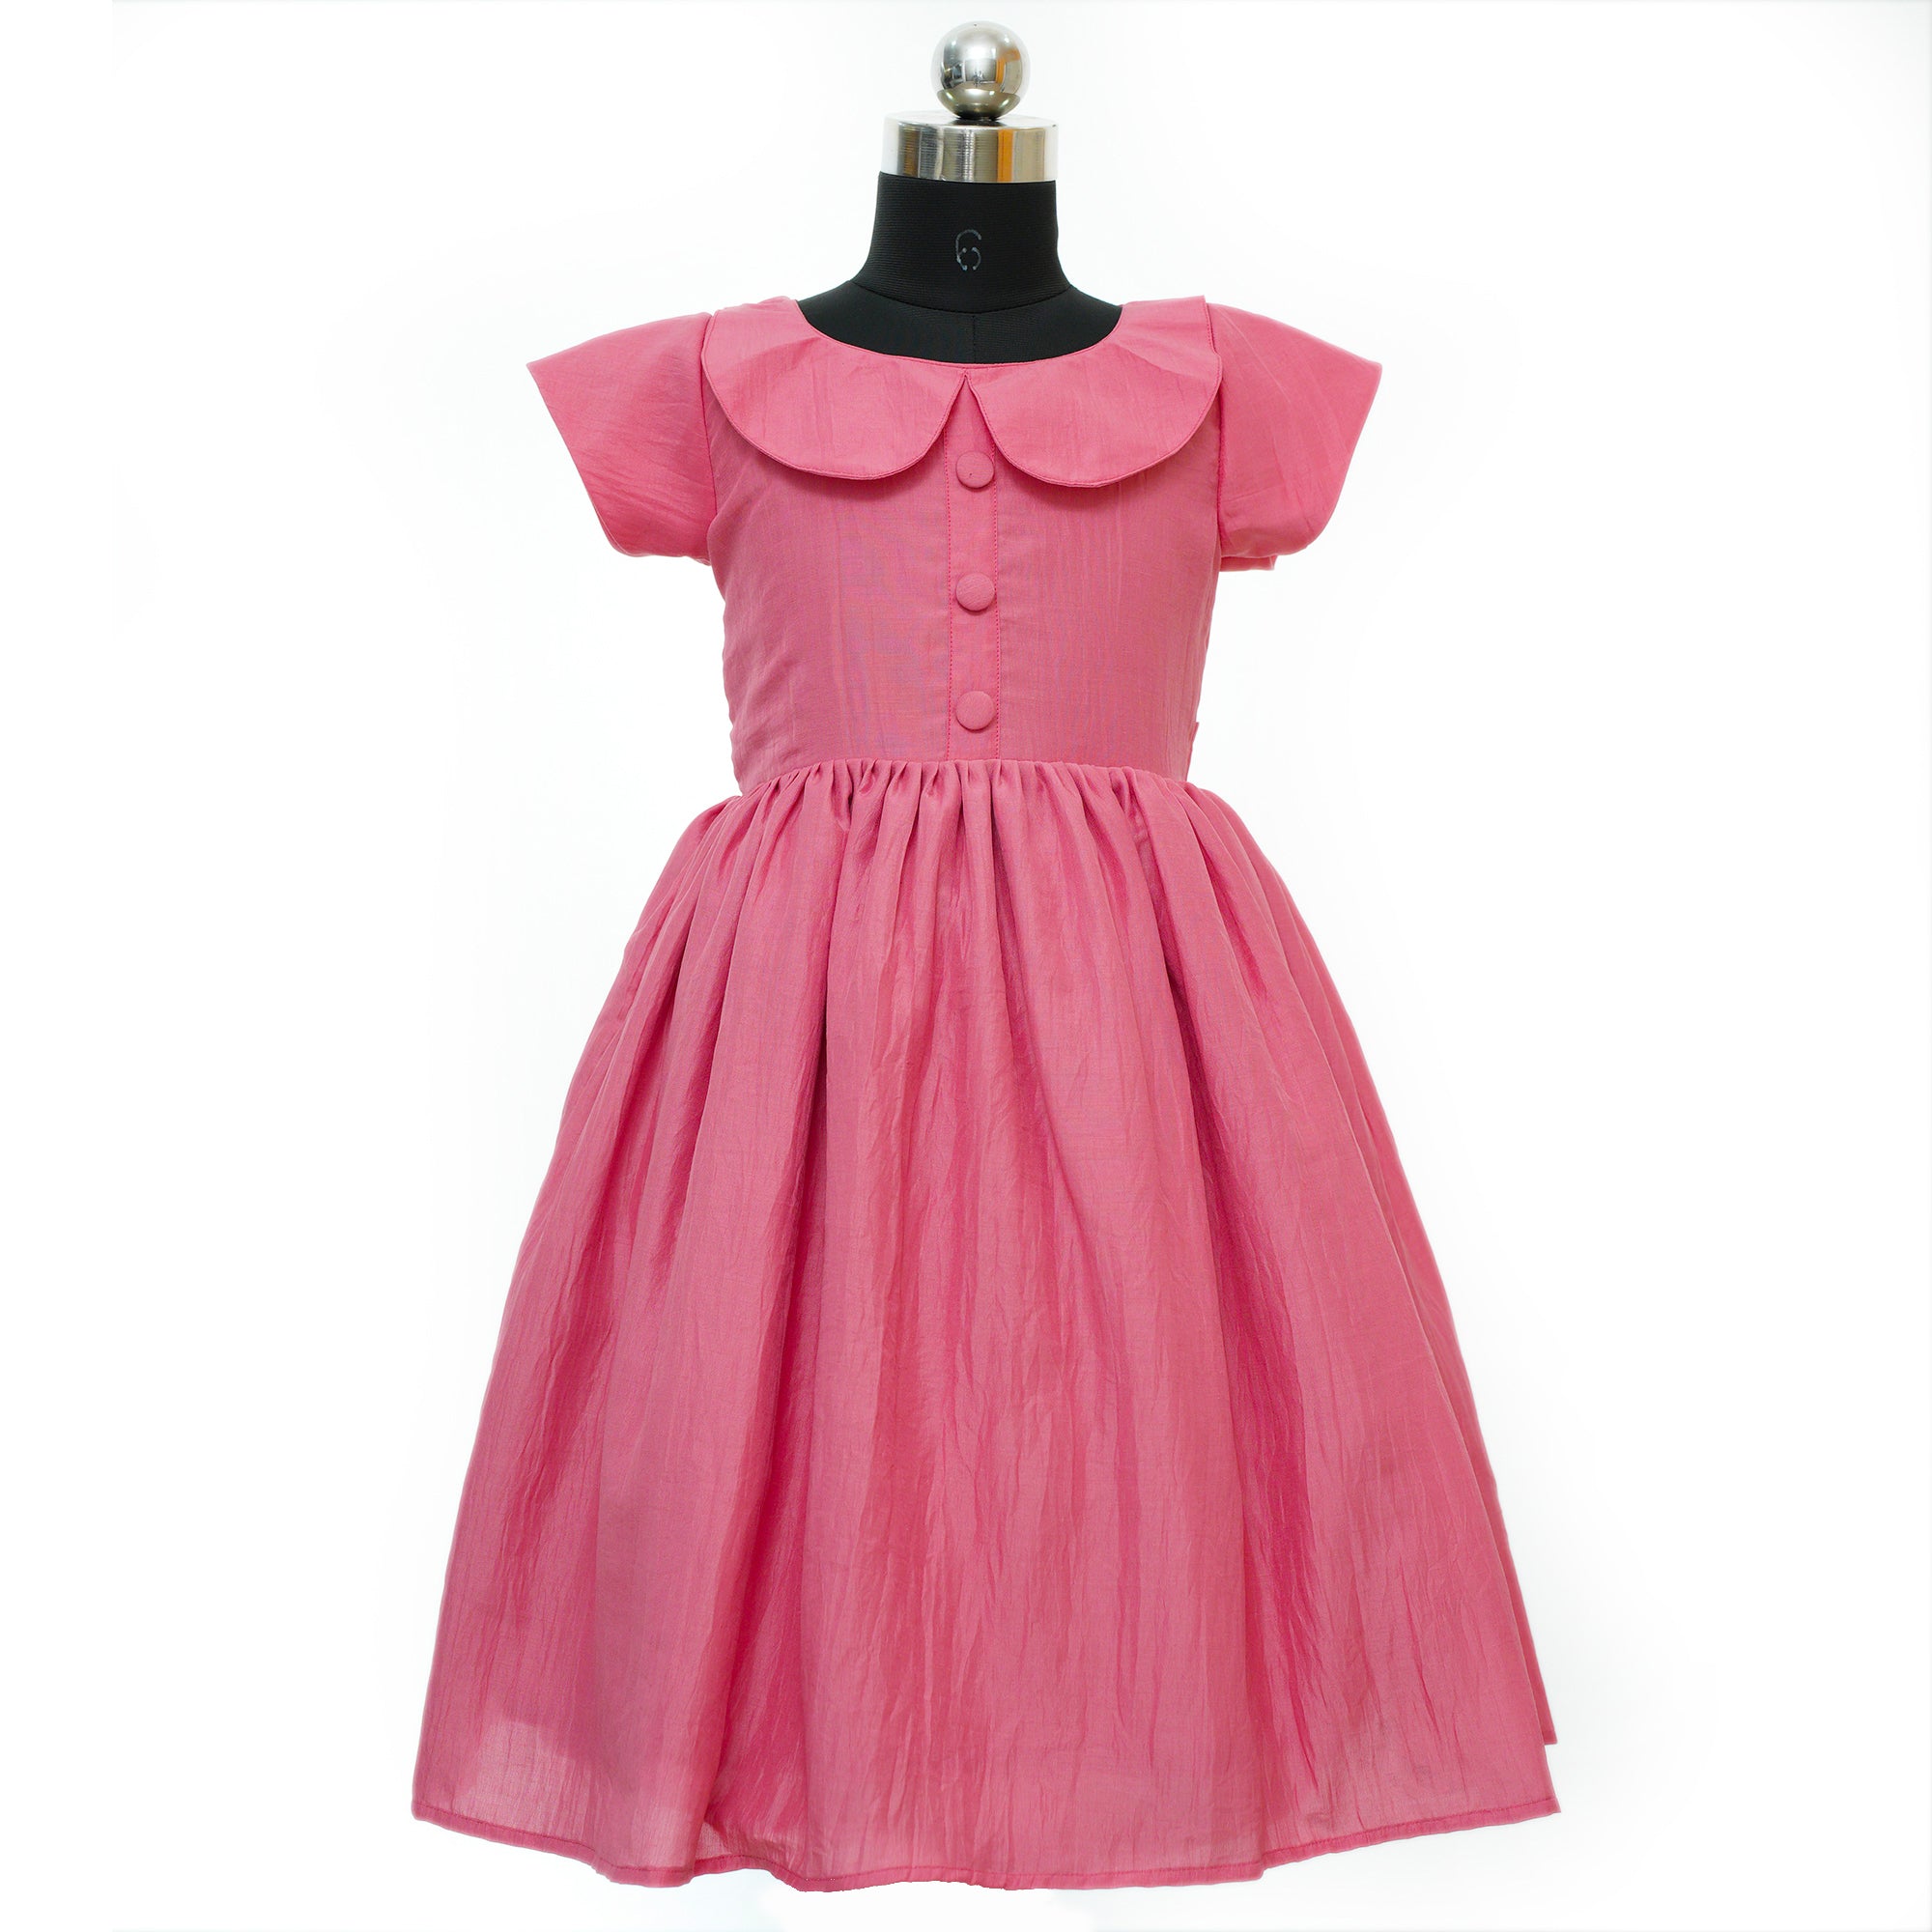 HEYKIDOO Kids Girls Peter Pan Collar Casual Party Frock Dress-Pink